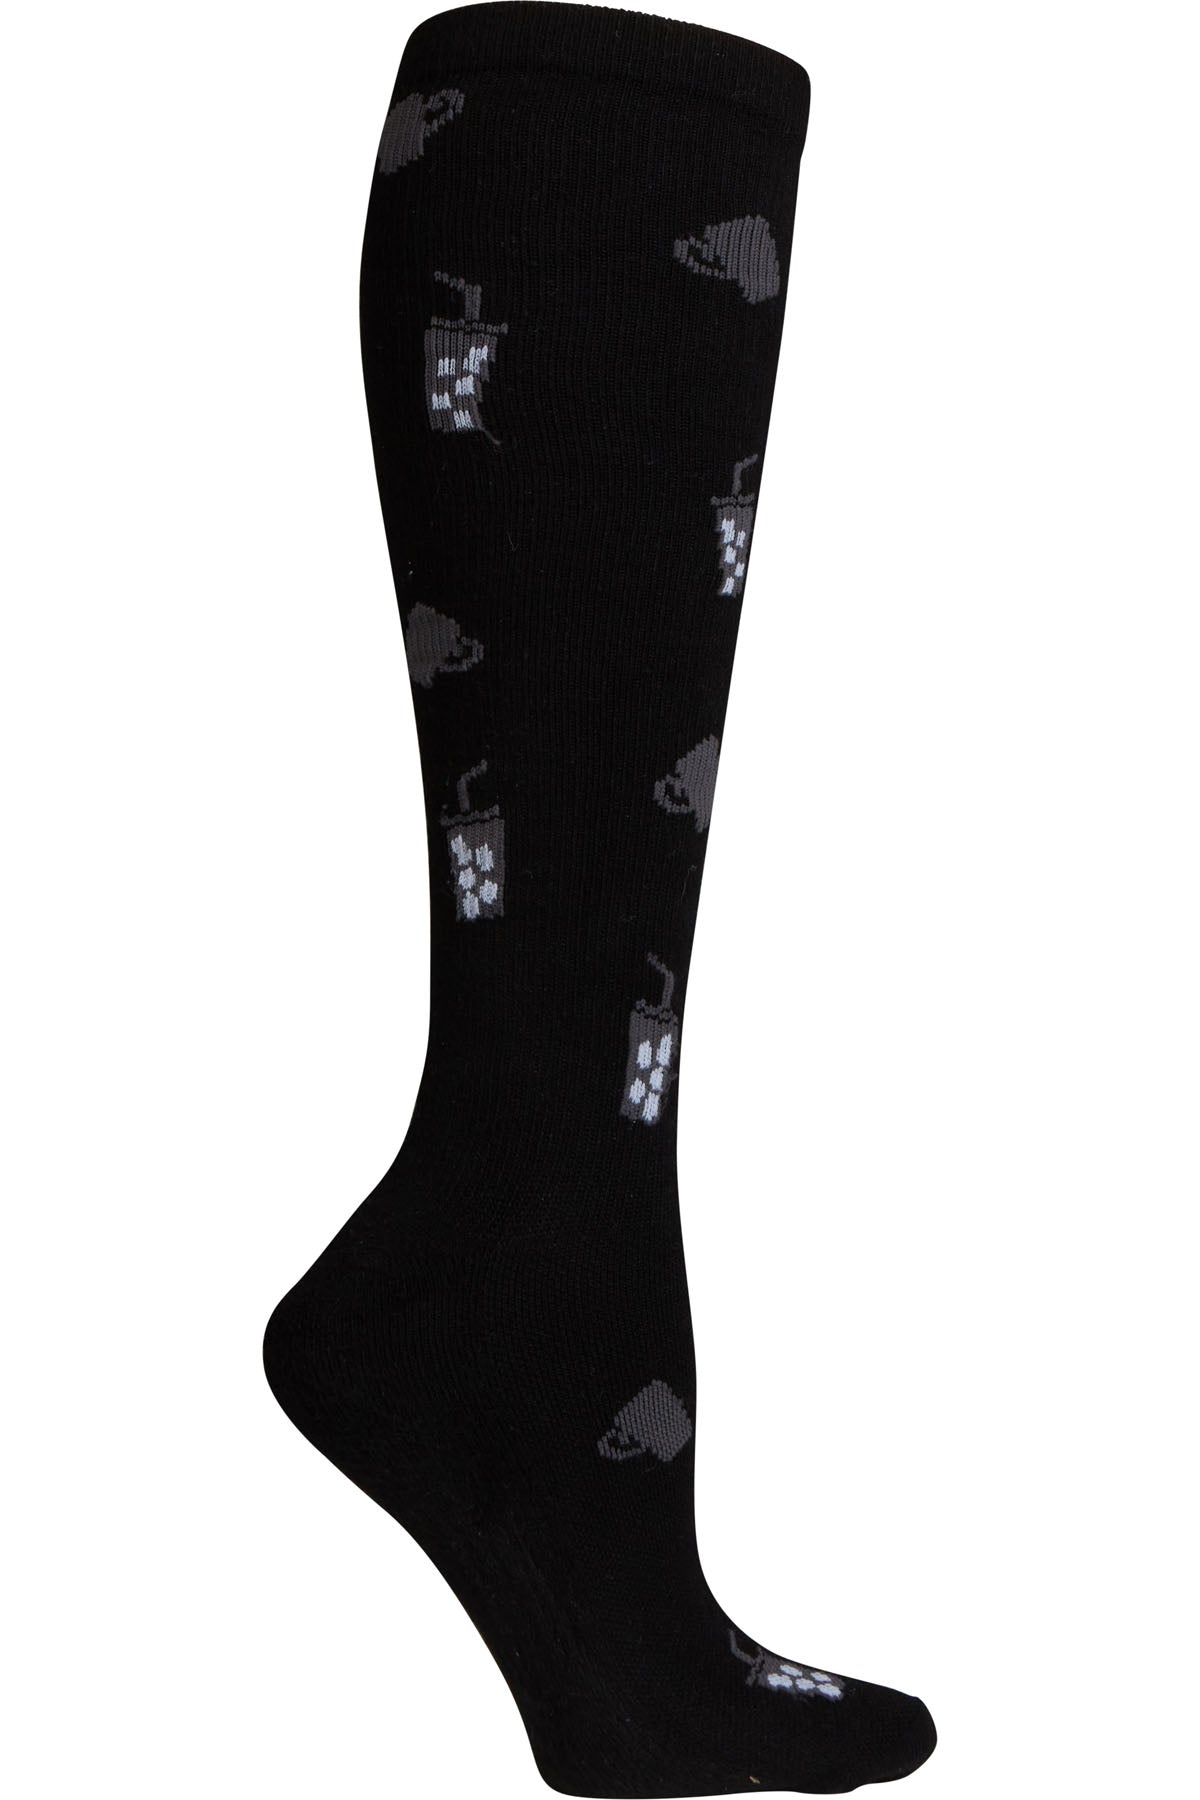 Knee High 15-20 mmHg Compression Socks Women's Compression Socks Cherokee Legwear Coffee Time S/M 